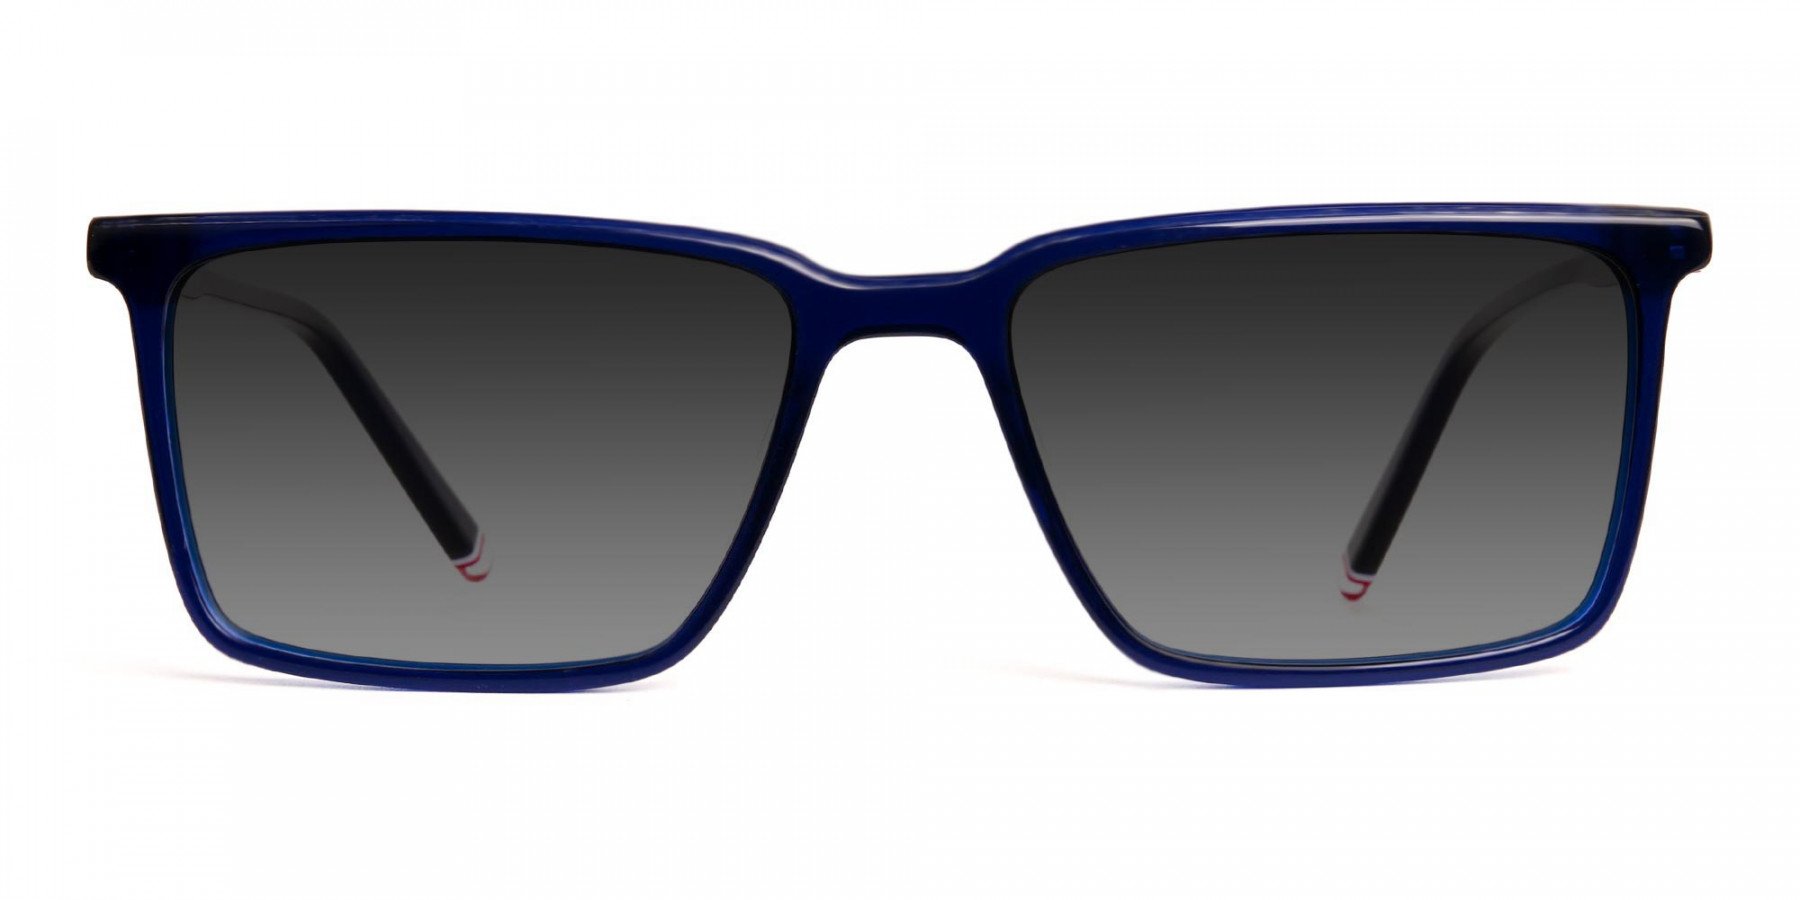 navy-blue-rectangular-full-rim-grey-tinted-sunglasses-frames-1